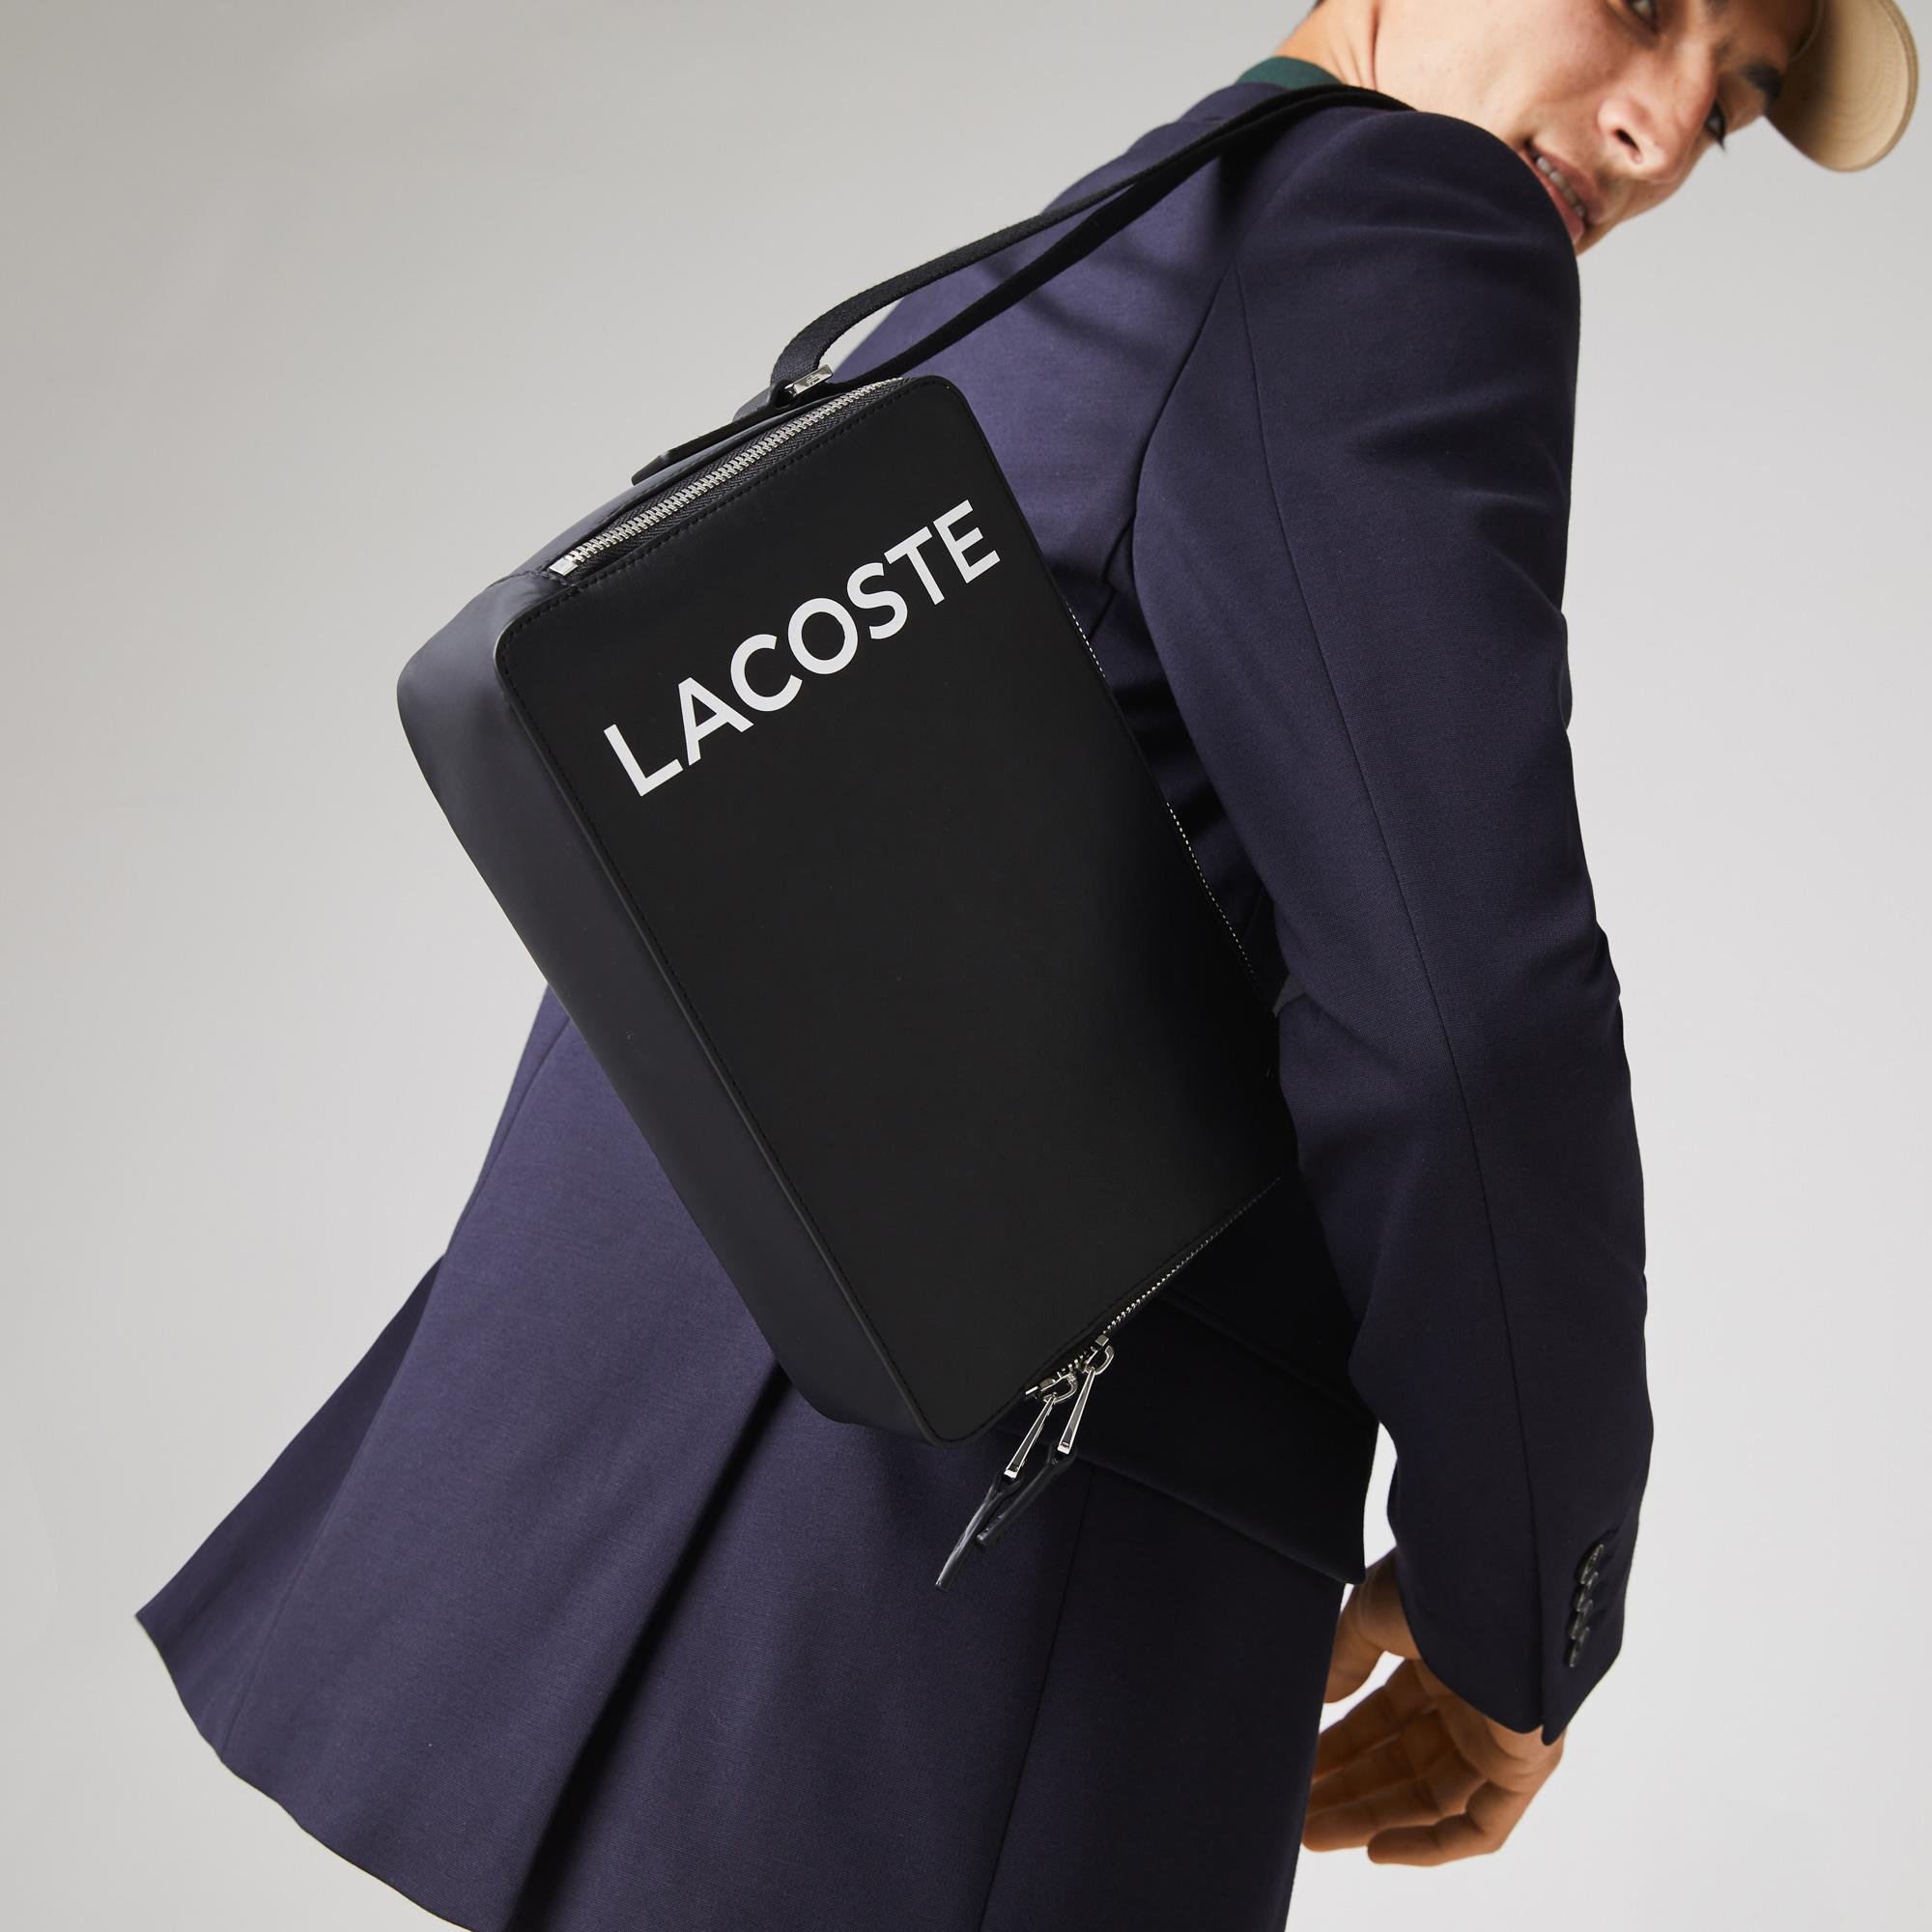 Lacoste Men's L.12.12 Branded Smooth Leather Rectangular Crossbody Bag